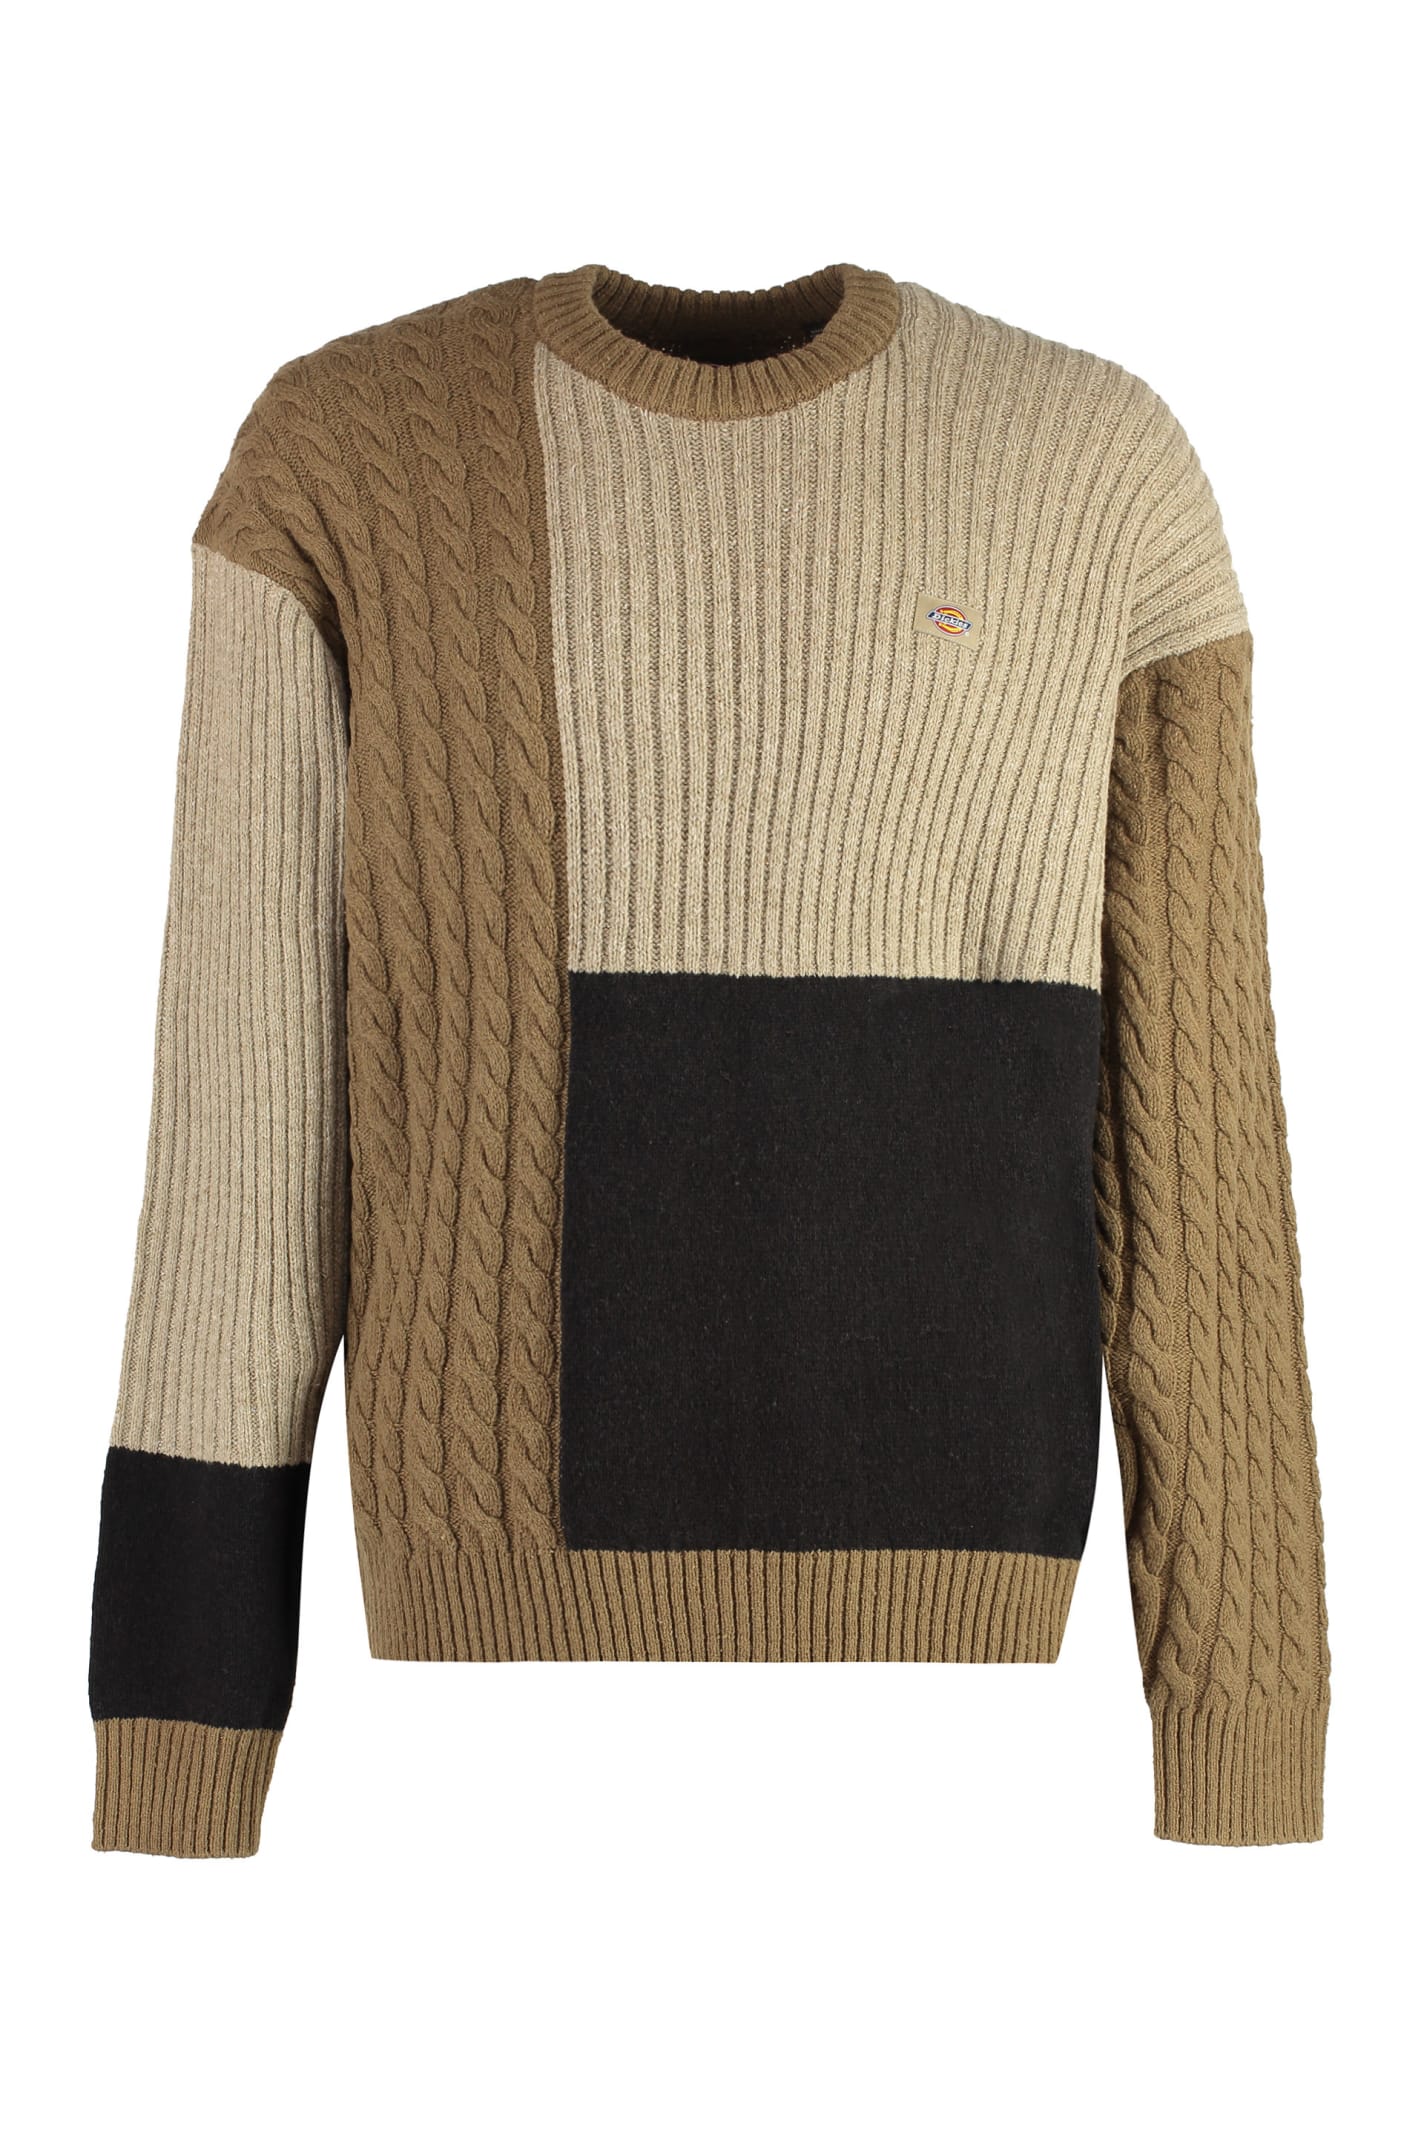 Lucas Cotton Blend Crew-neck Sweater